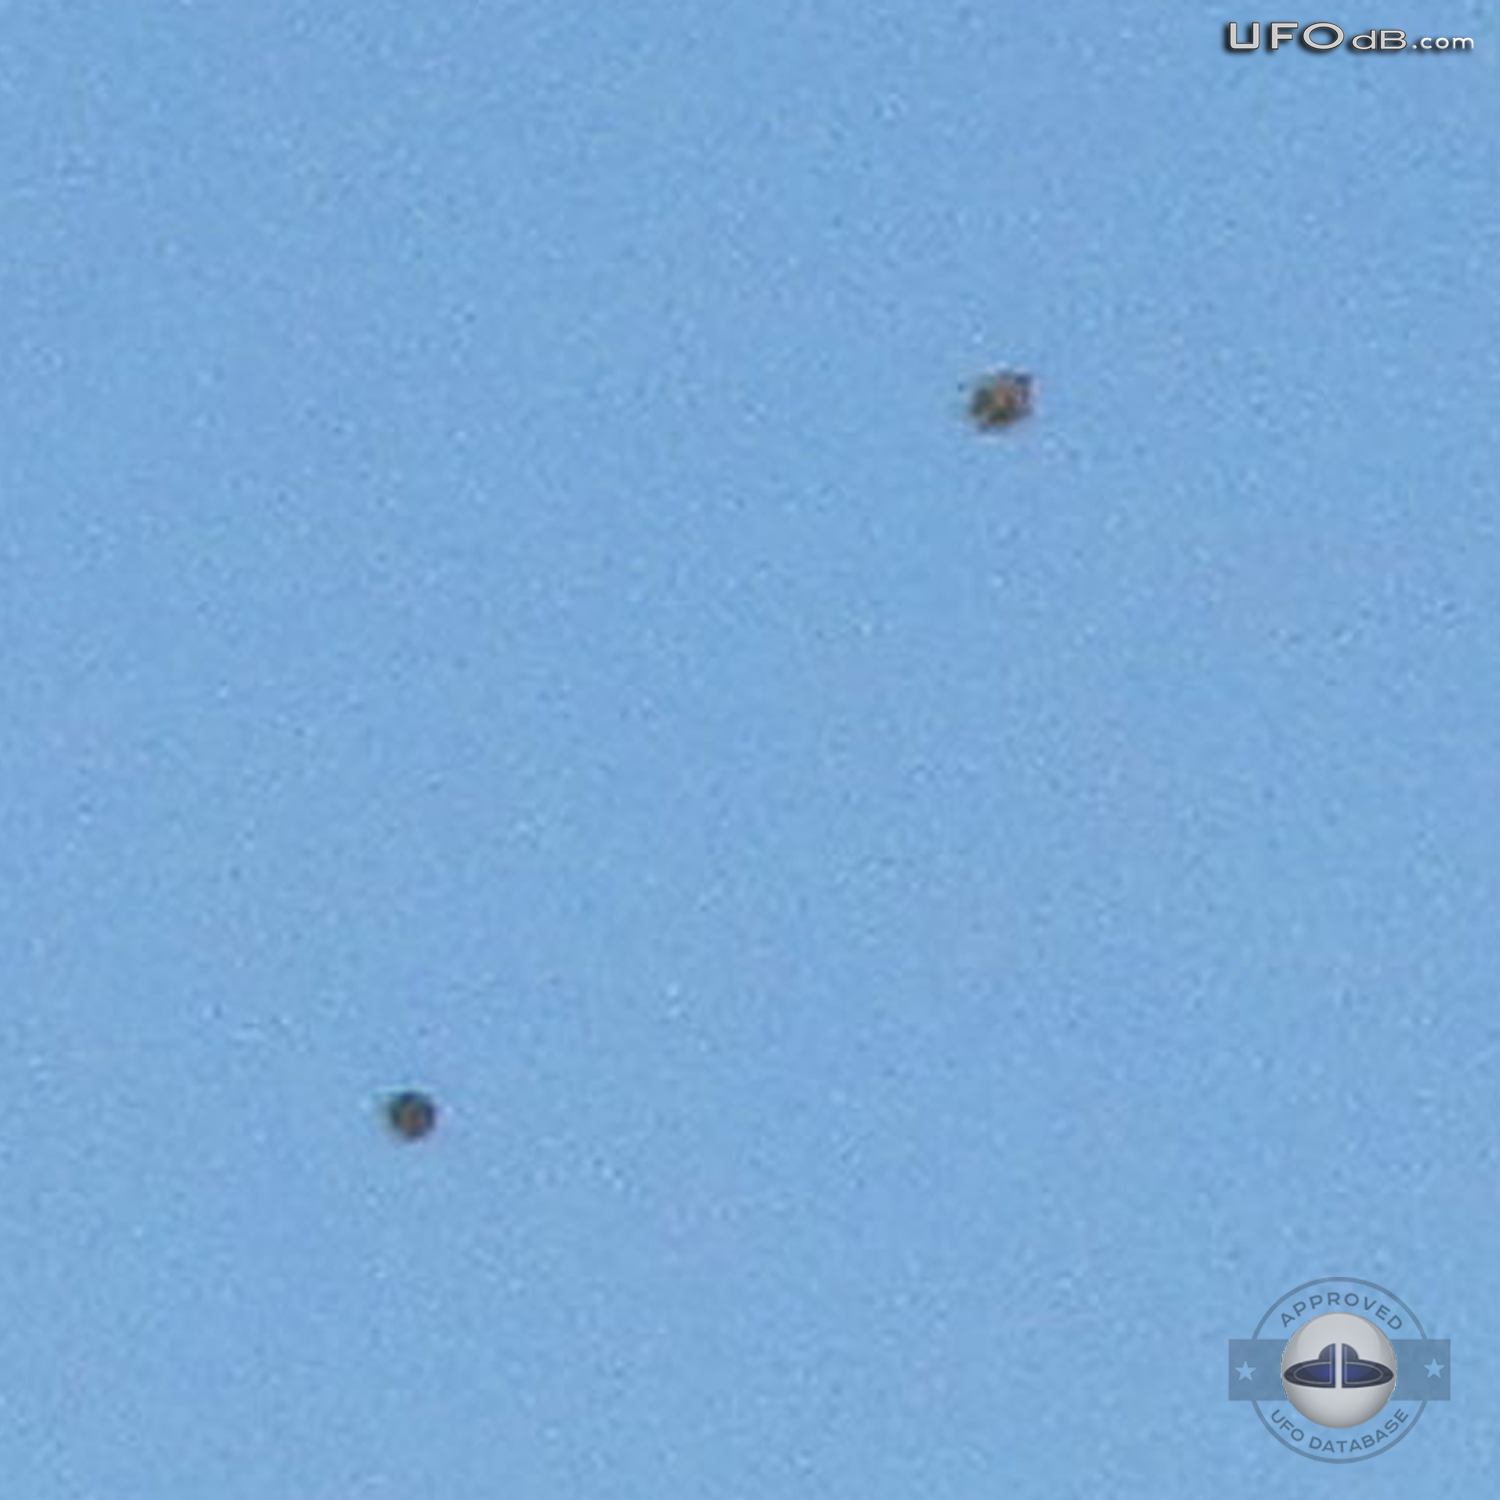 Dark UFOs near the Twentynine Palms US Marine corps base | May 7 2011 UFO Picture #315-3